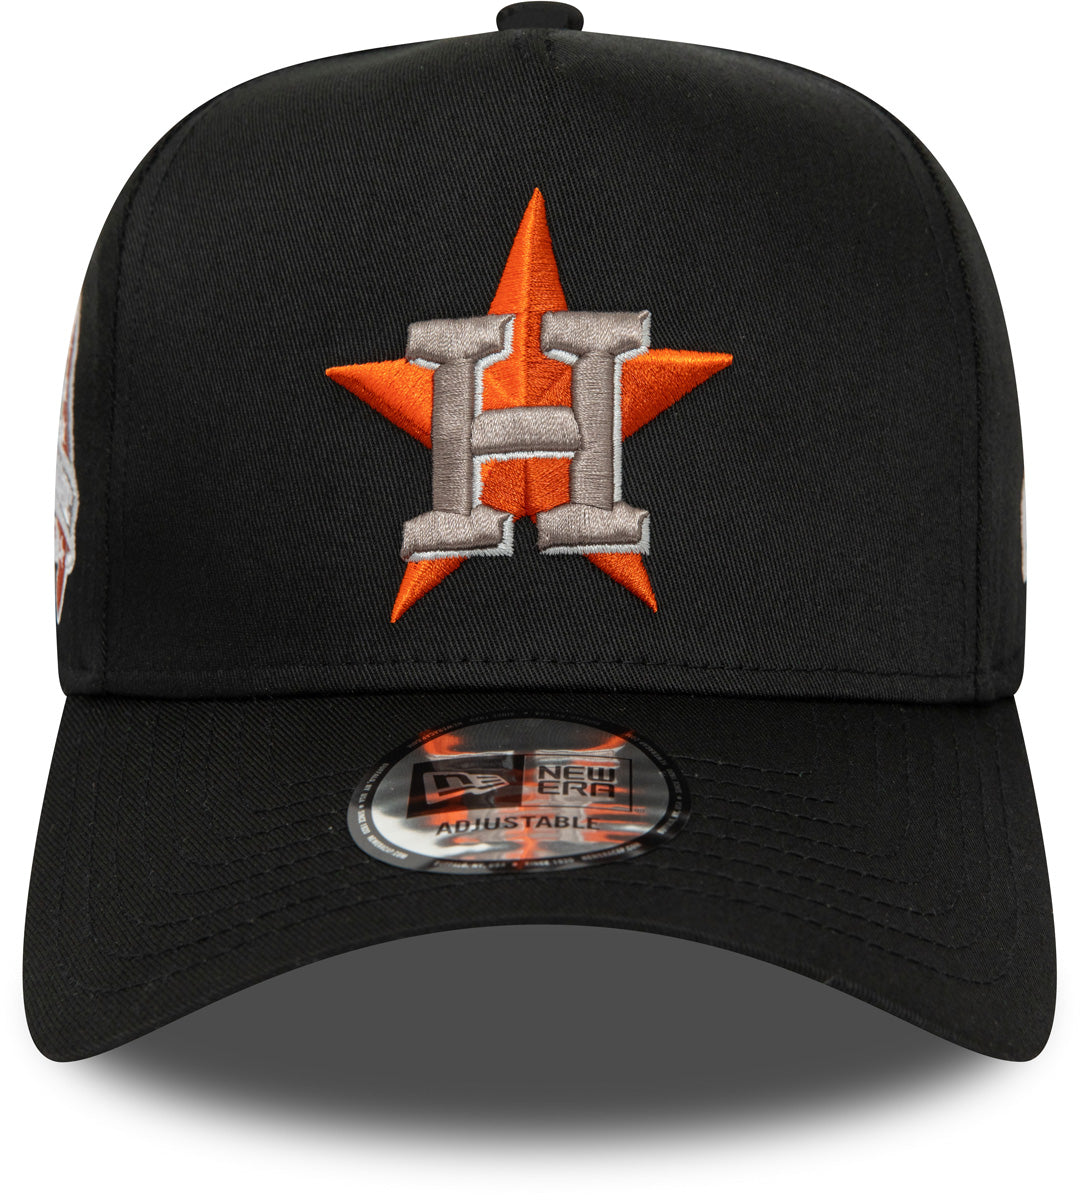 houston astros hat vintage